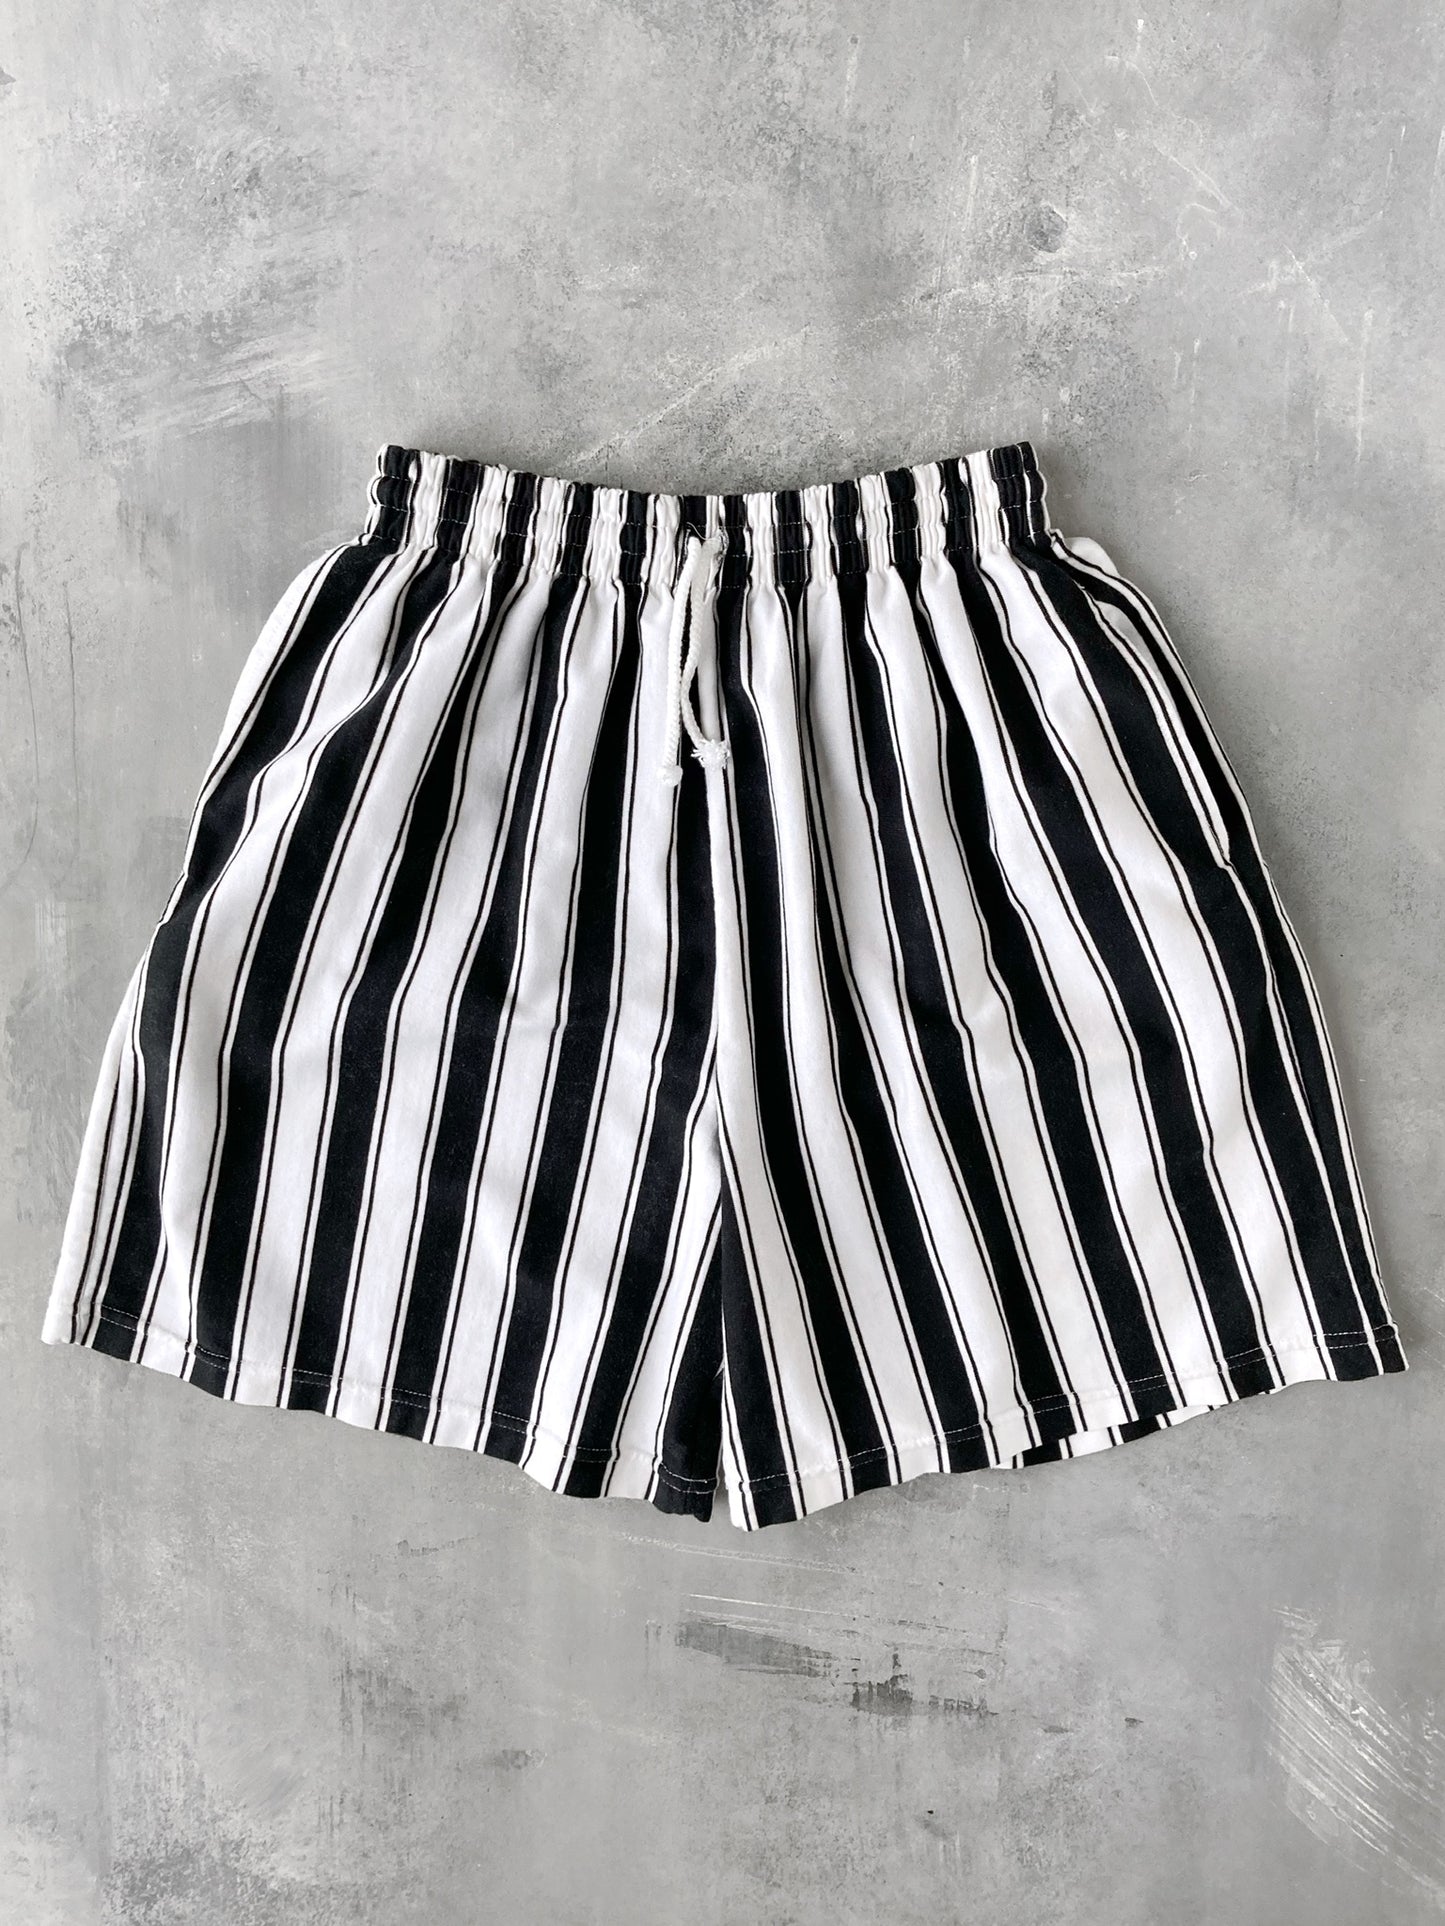 Pull-on Striped Shorts 90's - Small / Medium